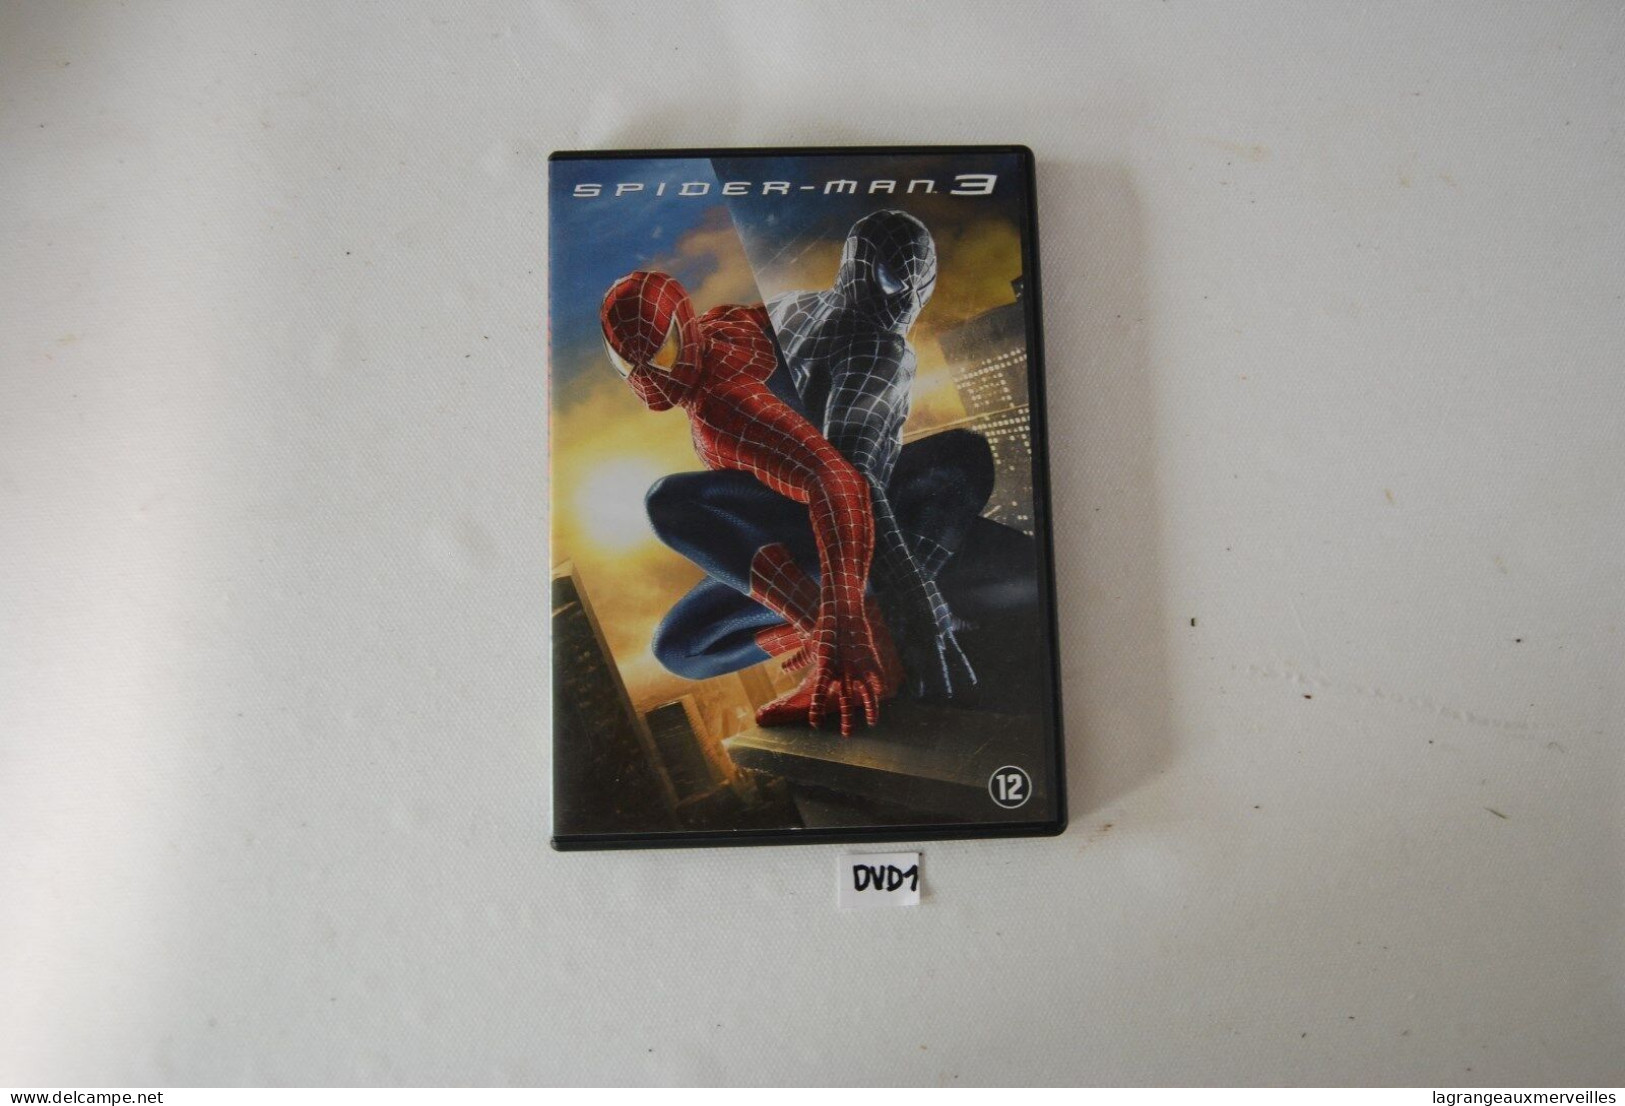 DVD 1 - SPIDER MAN 3 - Azione, Avventura